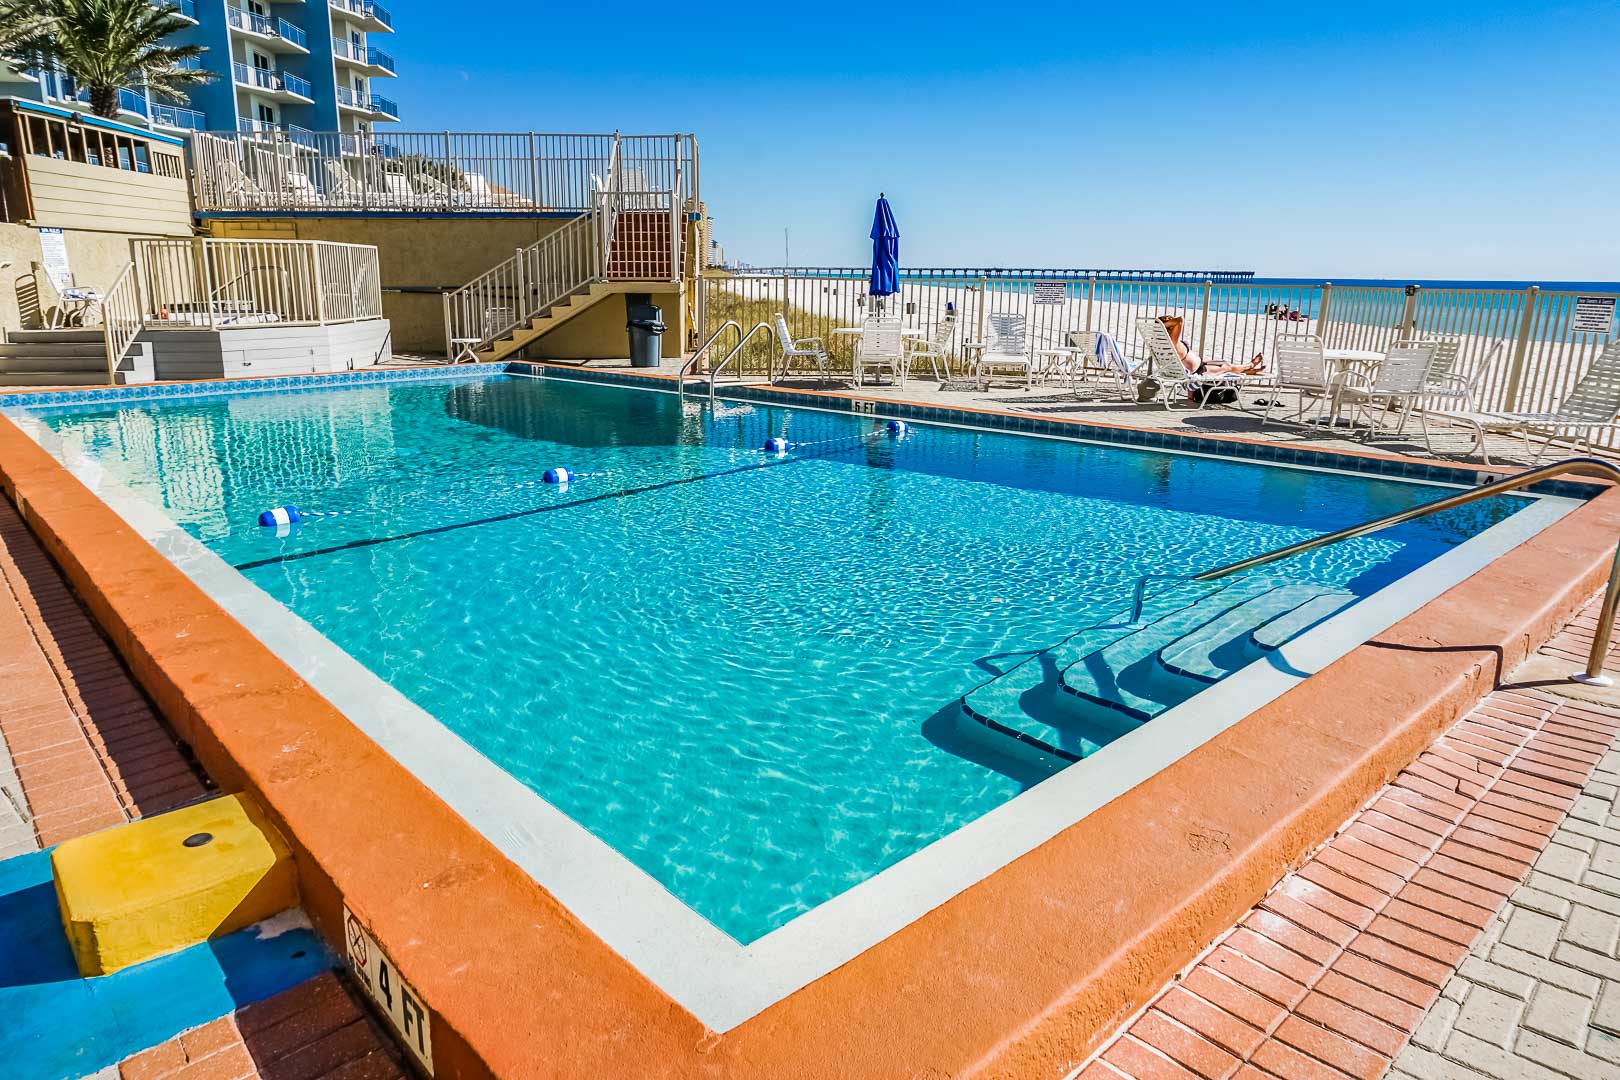 A crisp view of the pool at VRI's Panama City Resort & Club in Florida.